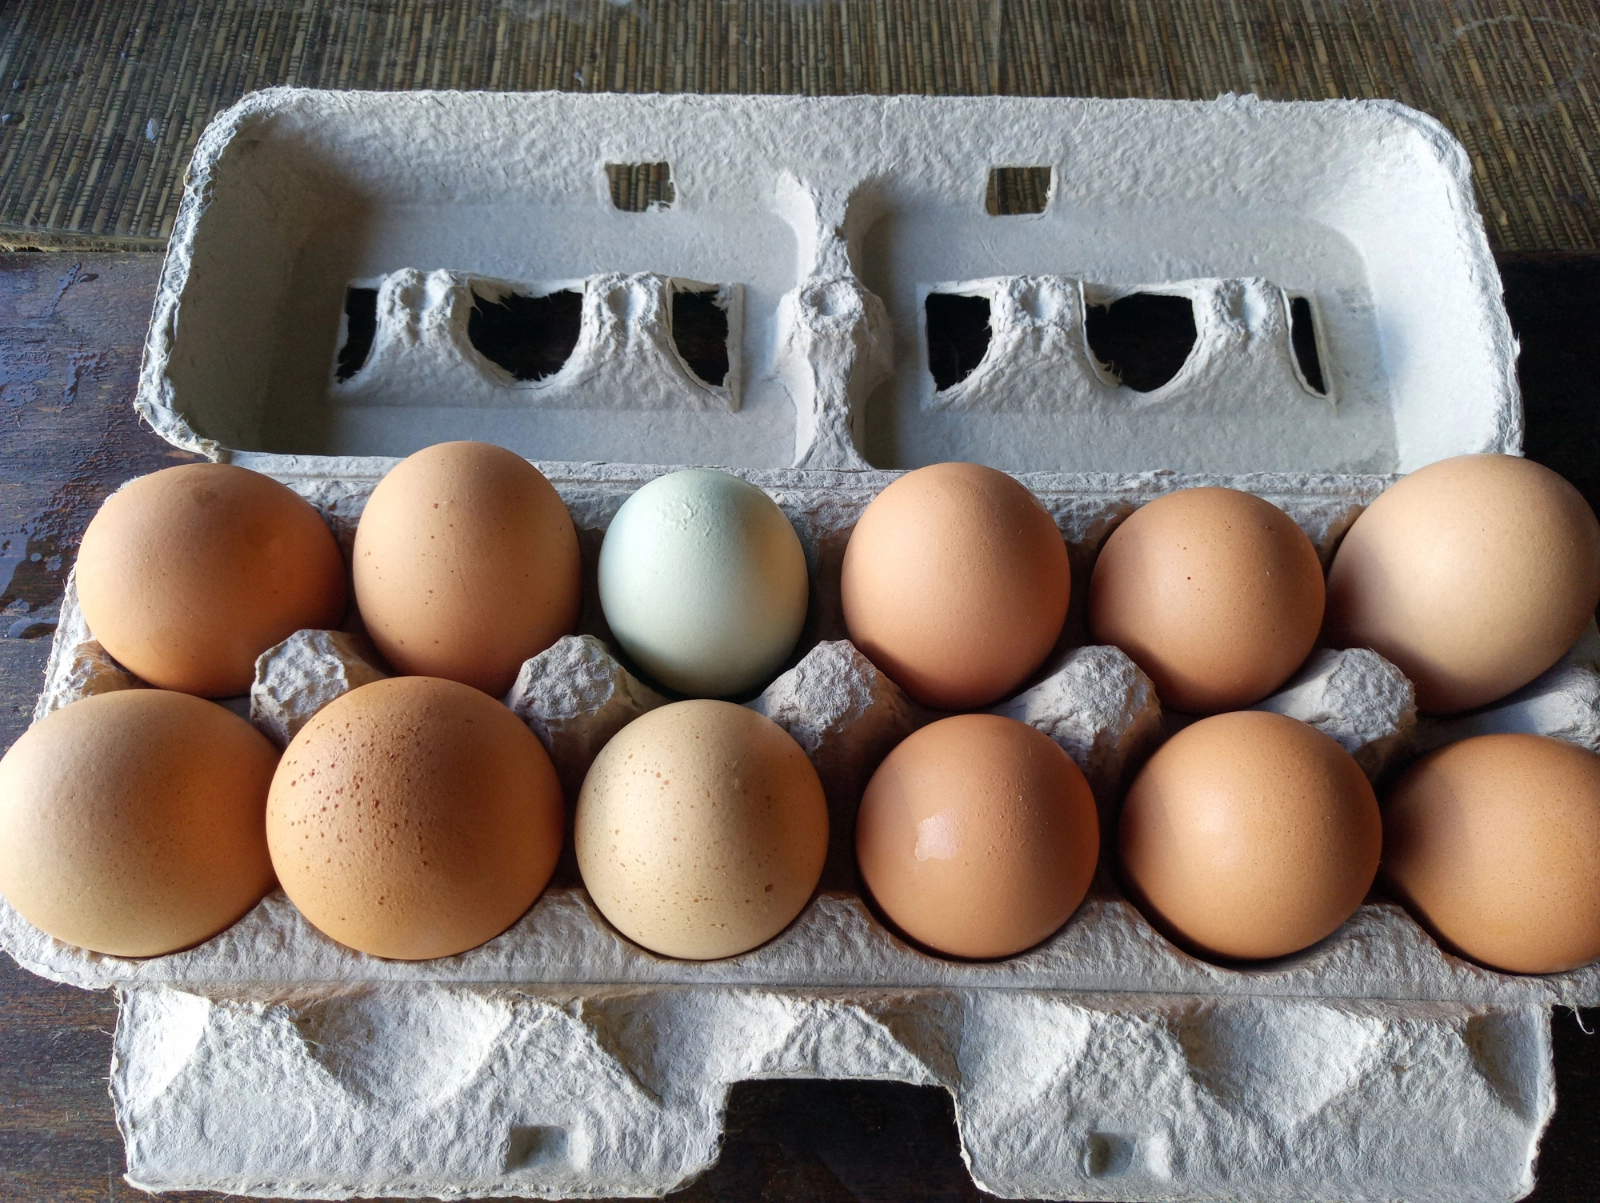 freerange-eggs-chemical-free-and-nongmo-better-than-just-nongmo-1-dozen-large